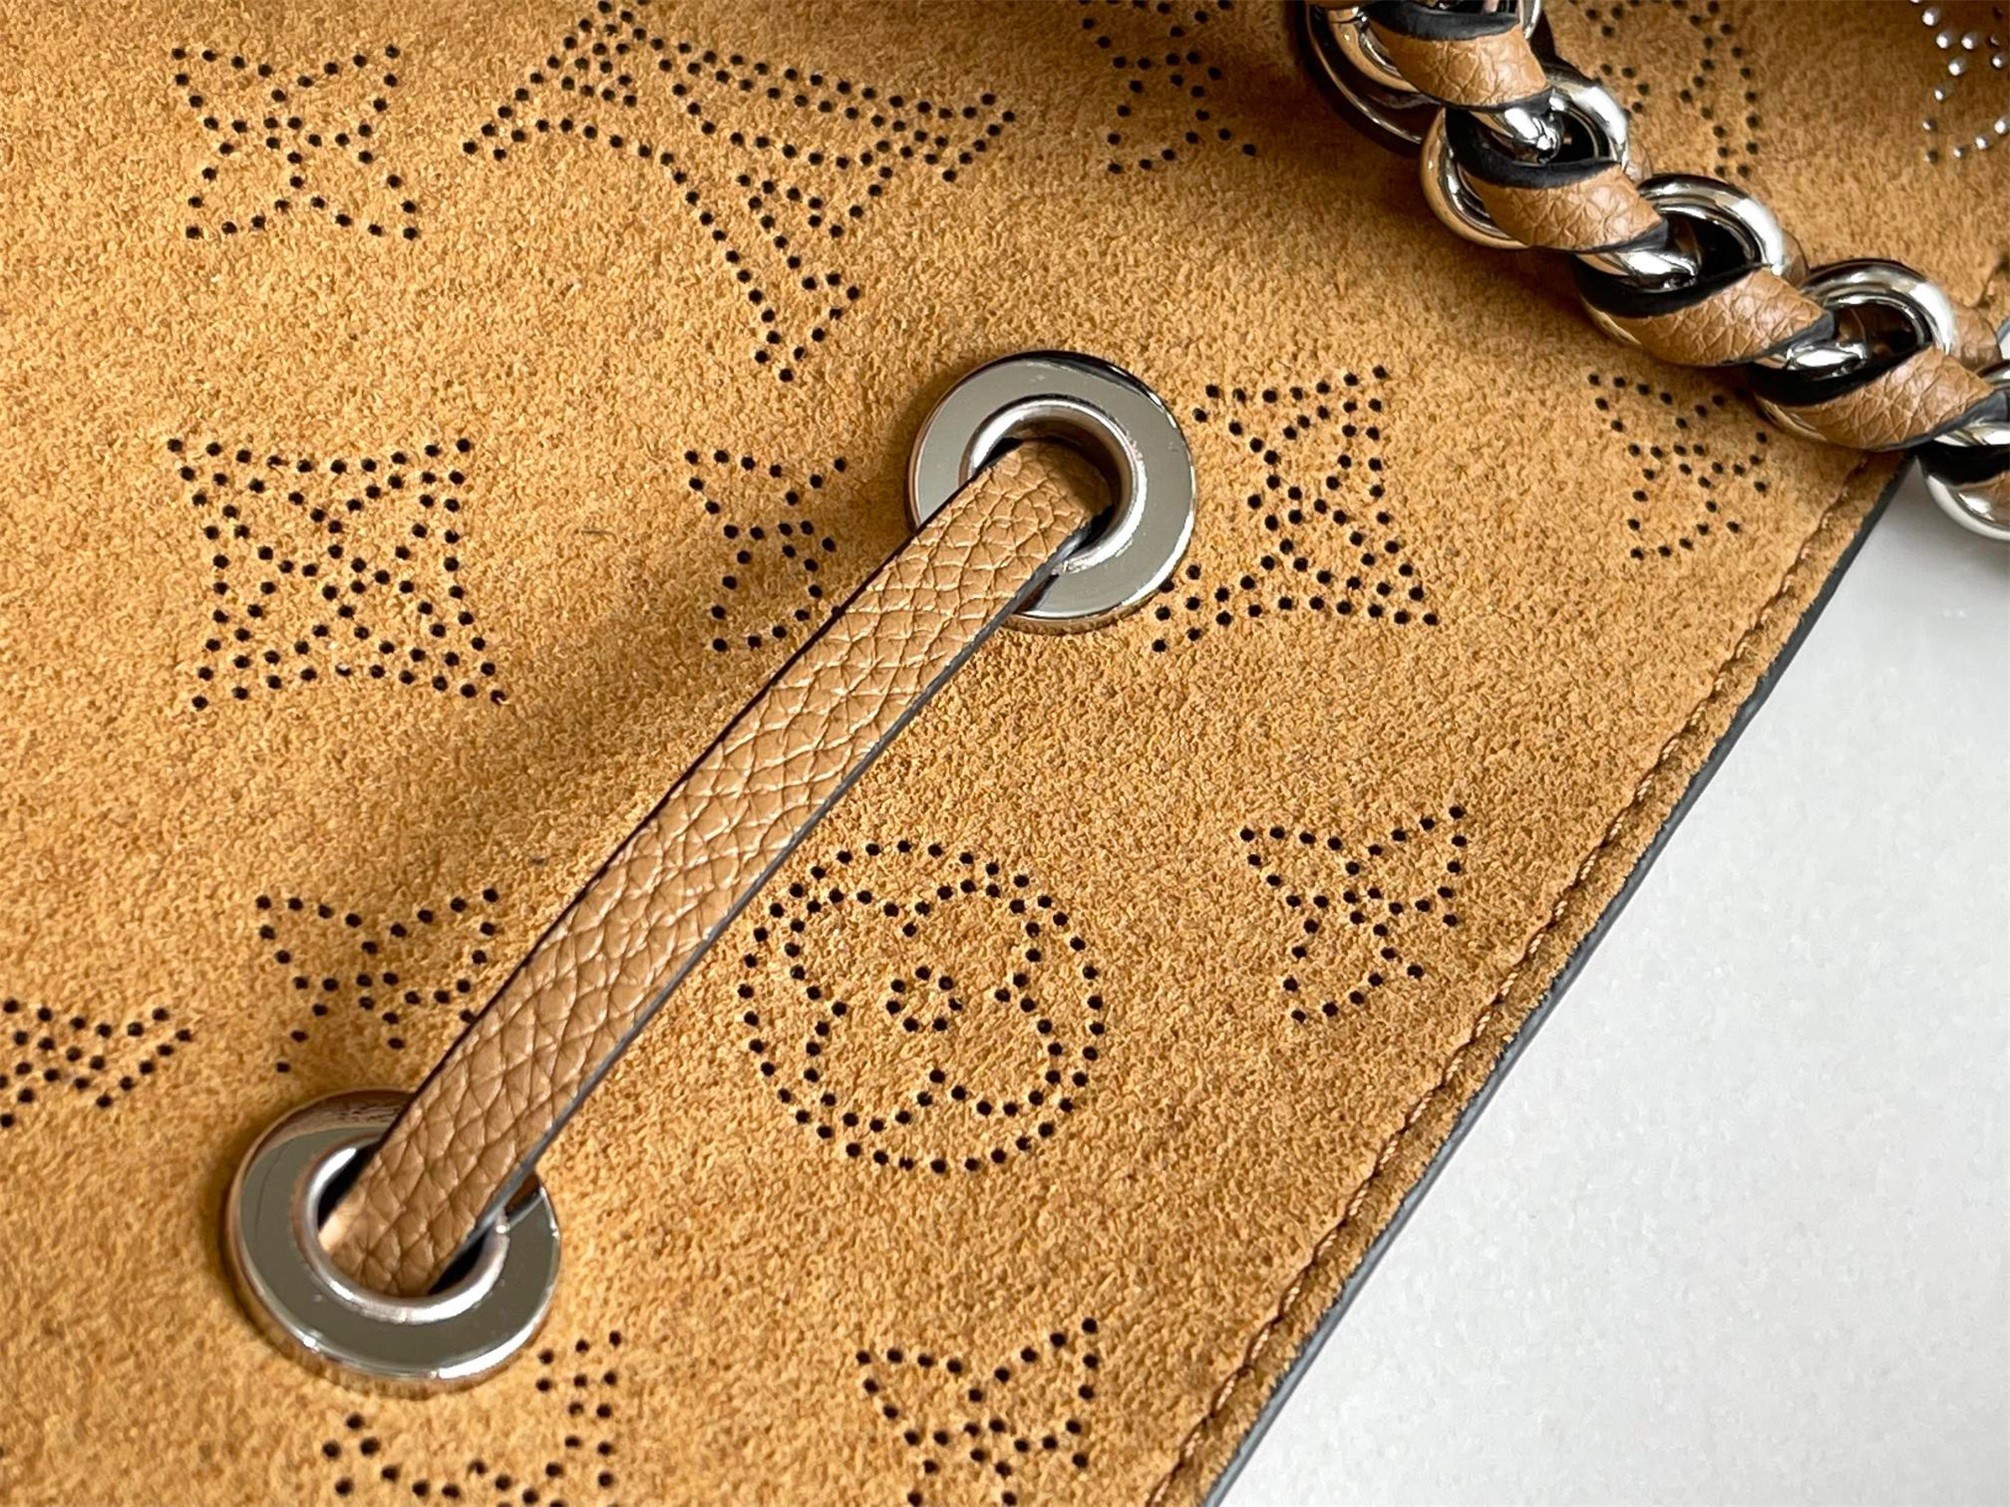 Replica Louis Vuitton M57201 Bella Bucket Bag in Mahina Calf Leather wite  Perforated Monogram Pattern Galet